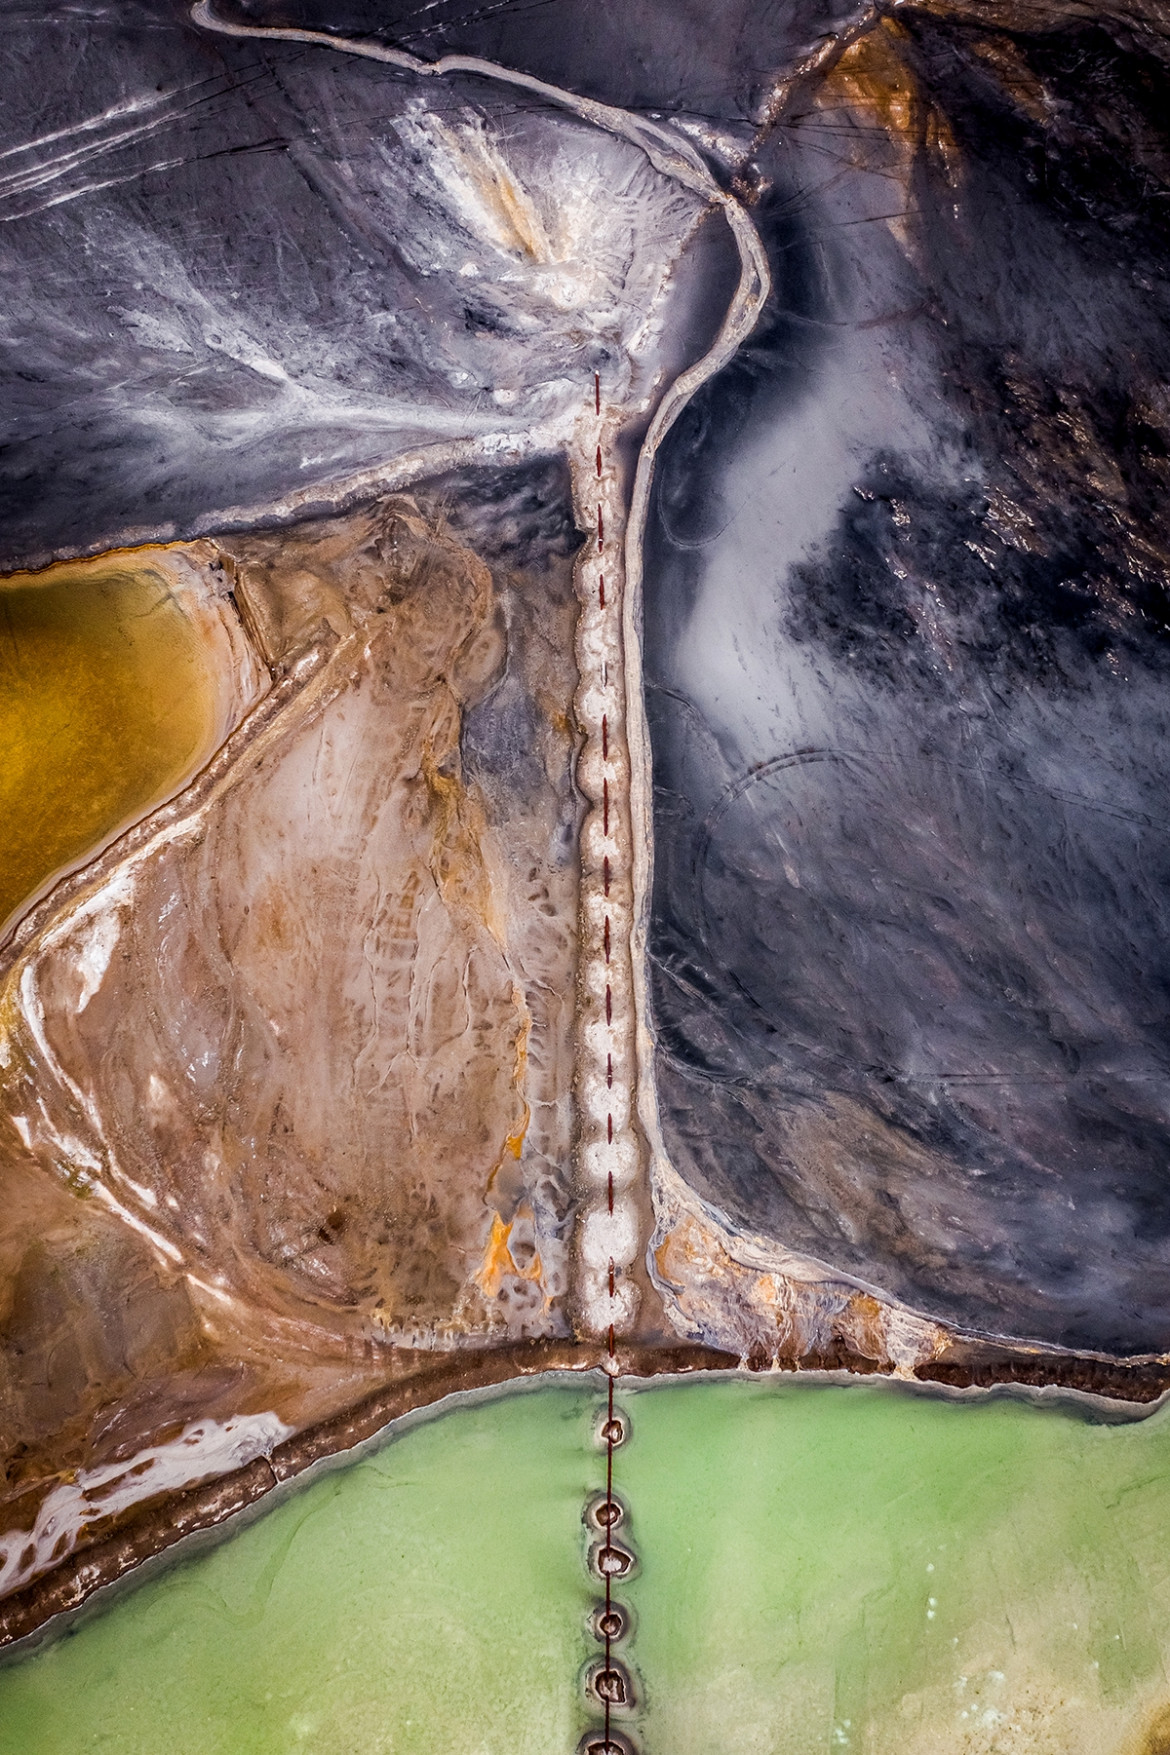 fot. Marcin Giba, z cyklu "Human On Earth", srebro w profesjonalnej kategorii Nature / Aerial | Moscow International Foto Awards 2020